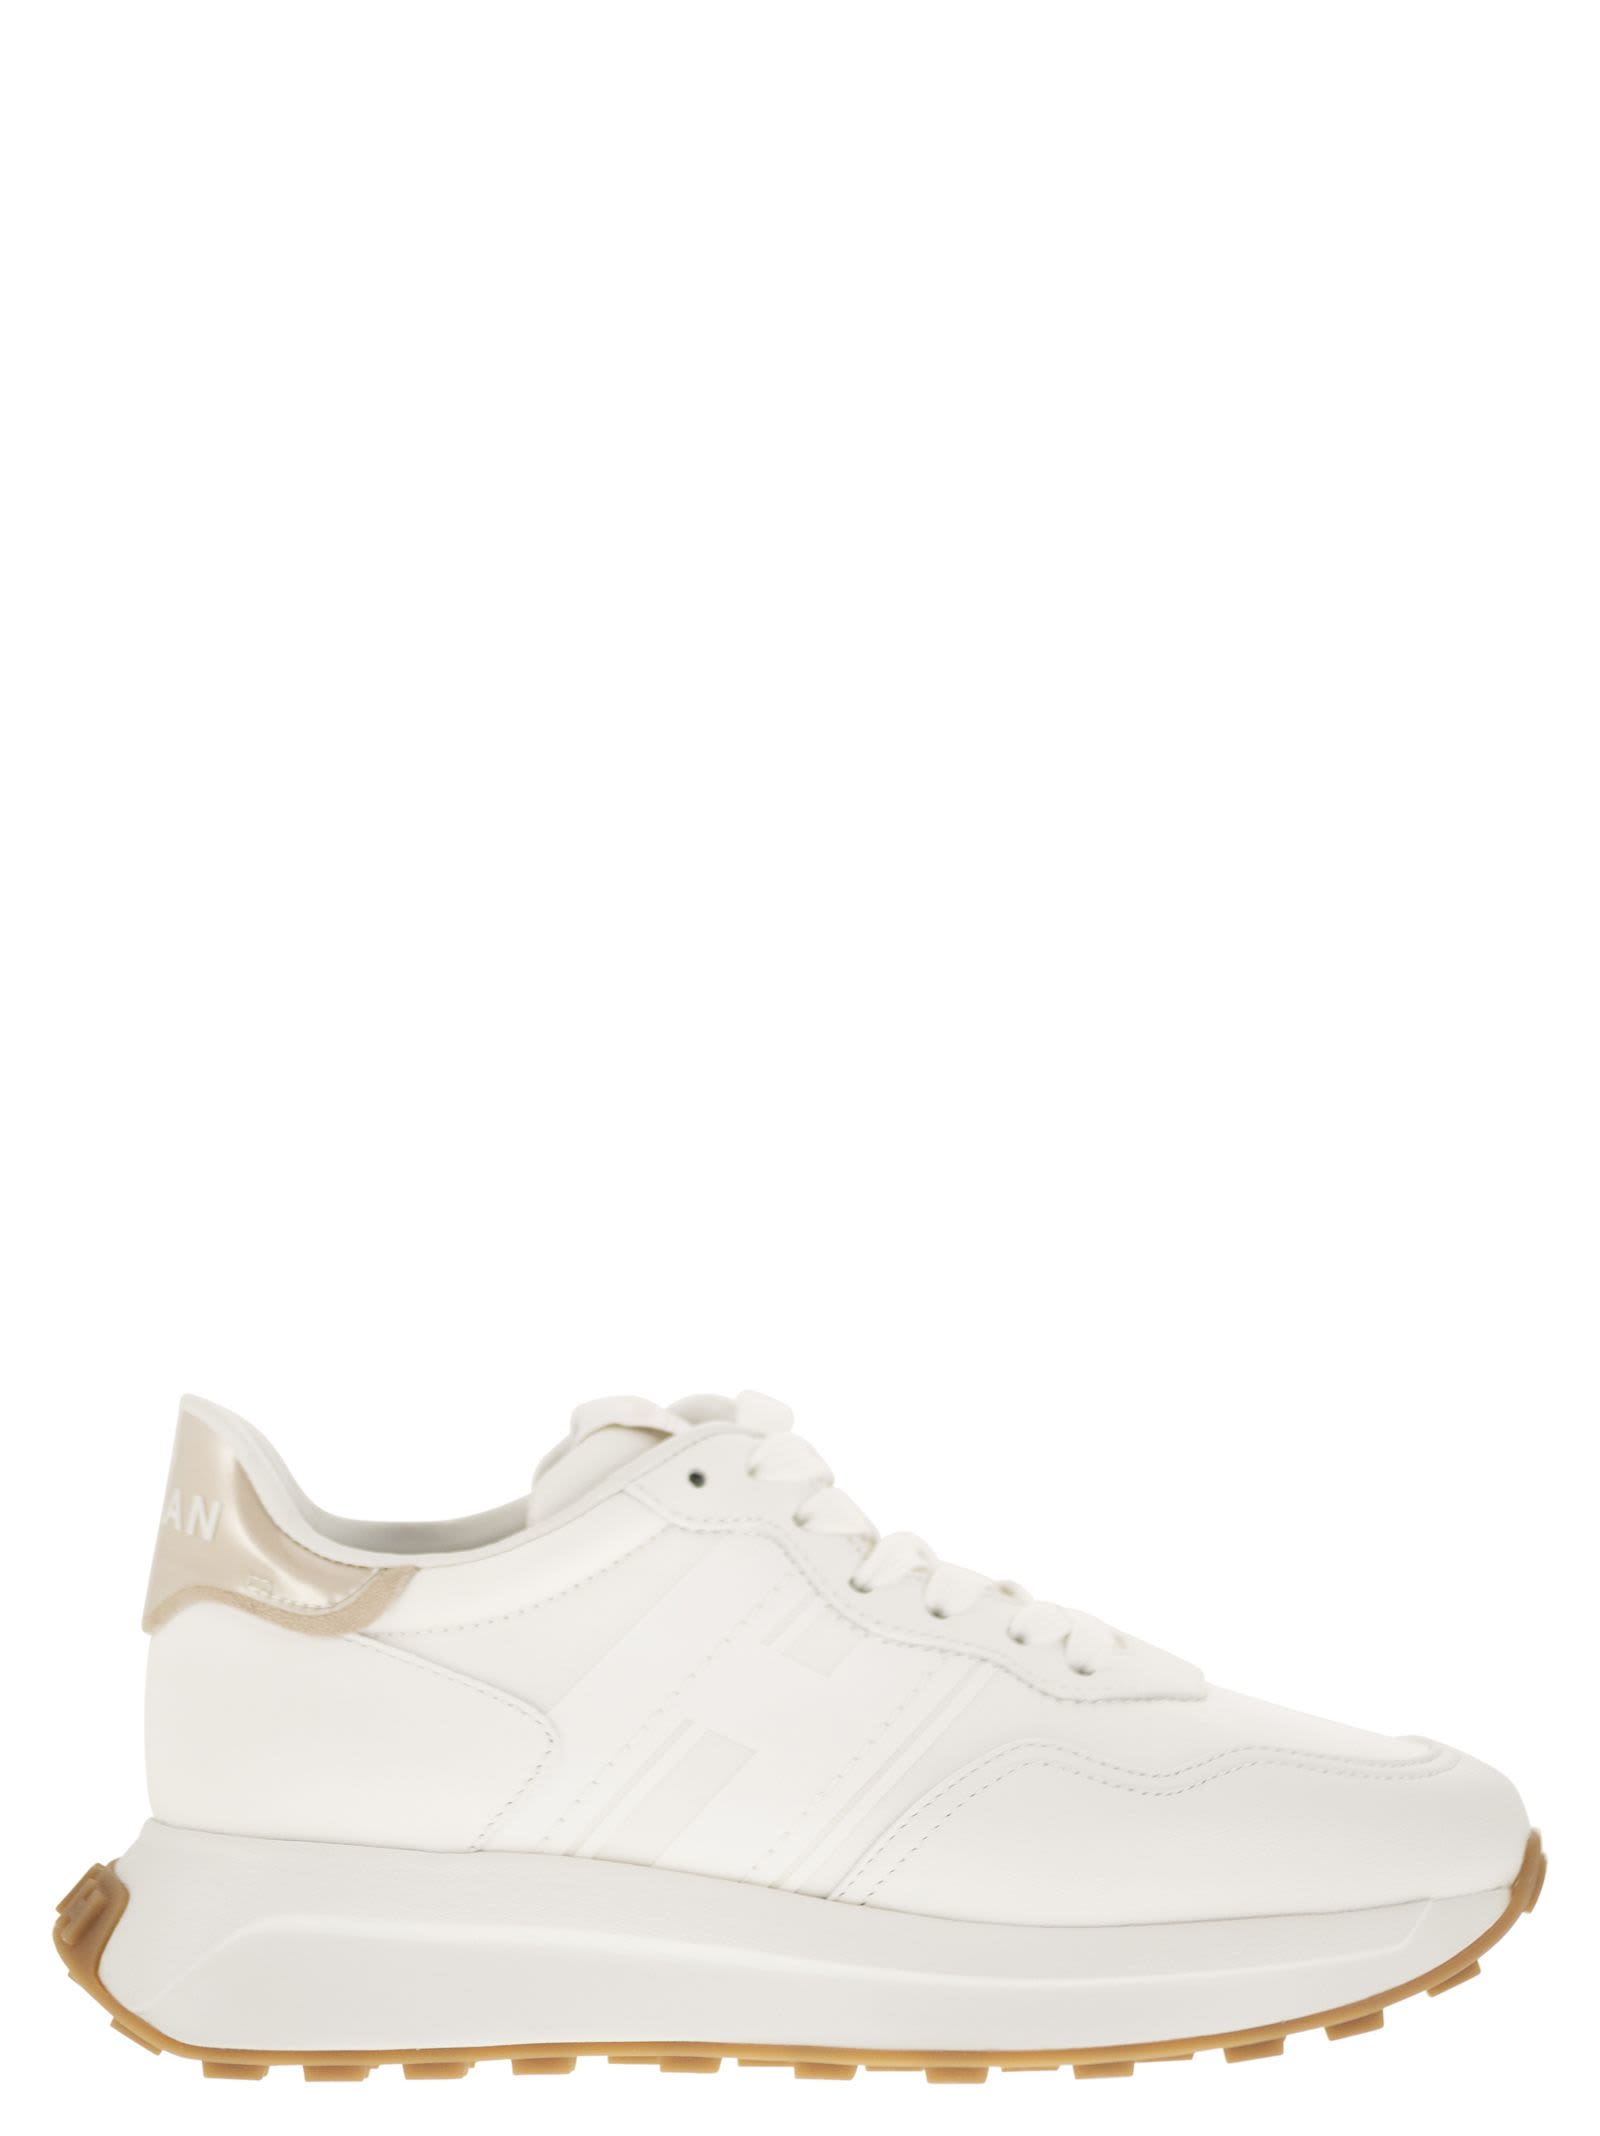 Hogan H641 - Sneakers In White